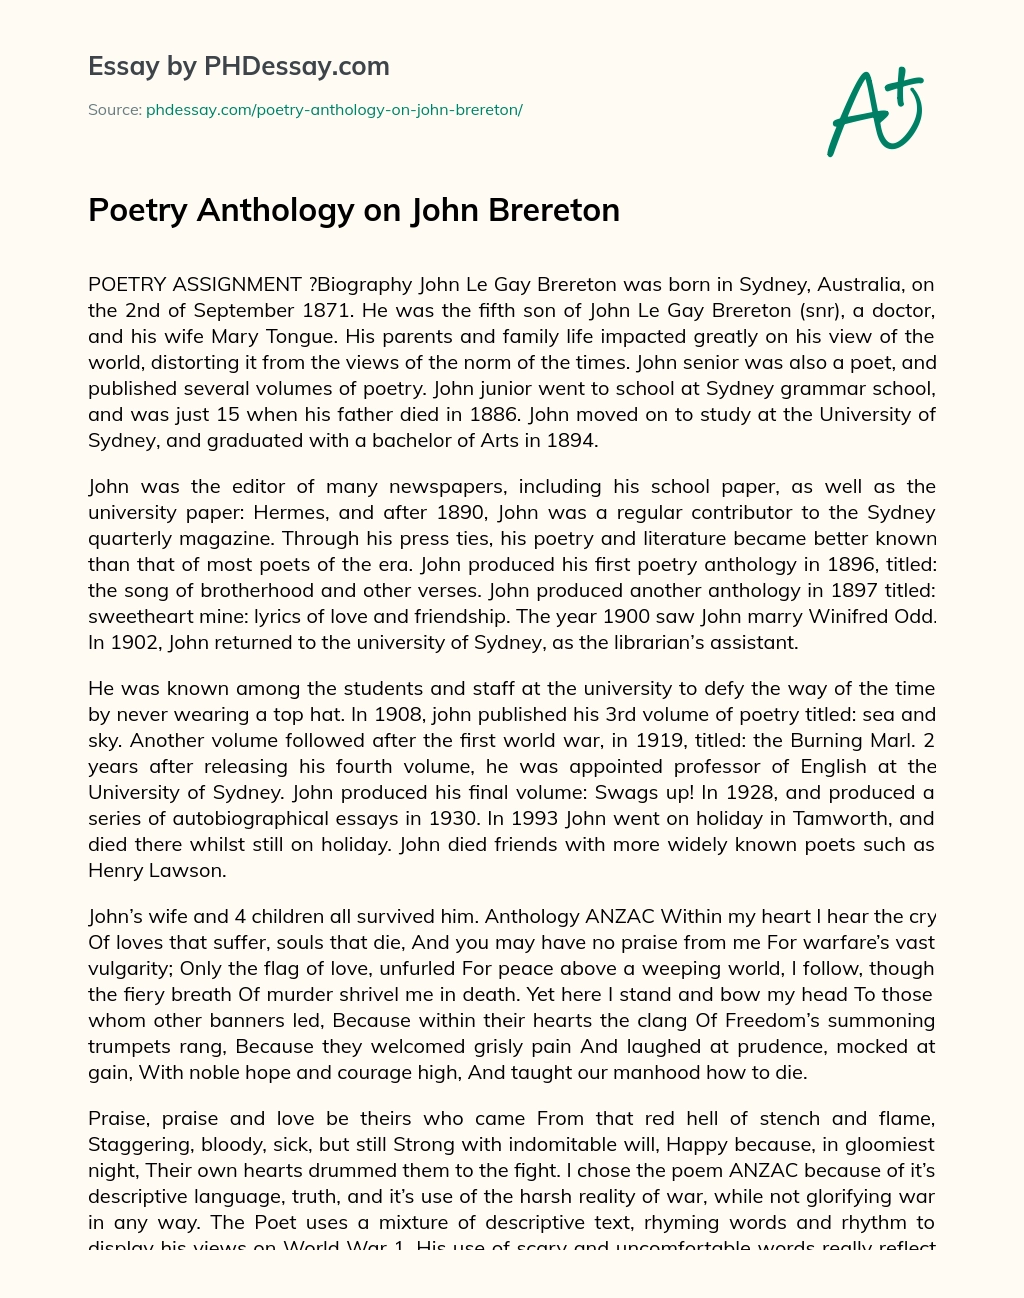 Poetry Anthology on John Brereton essay